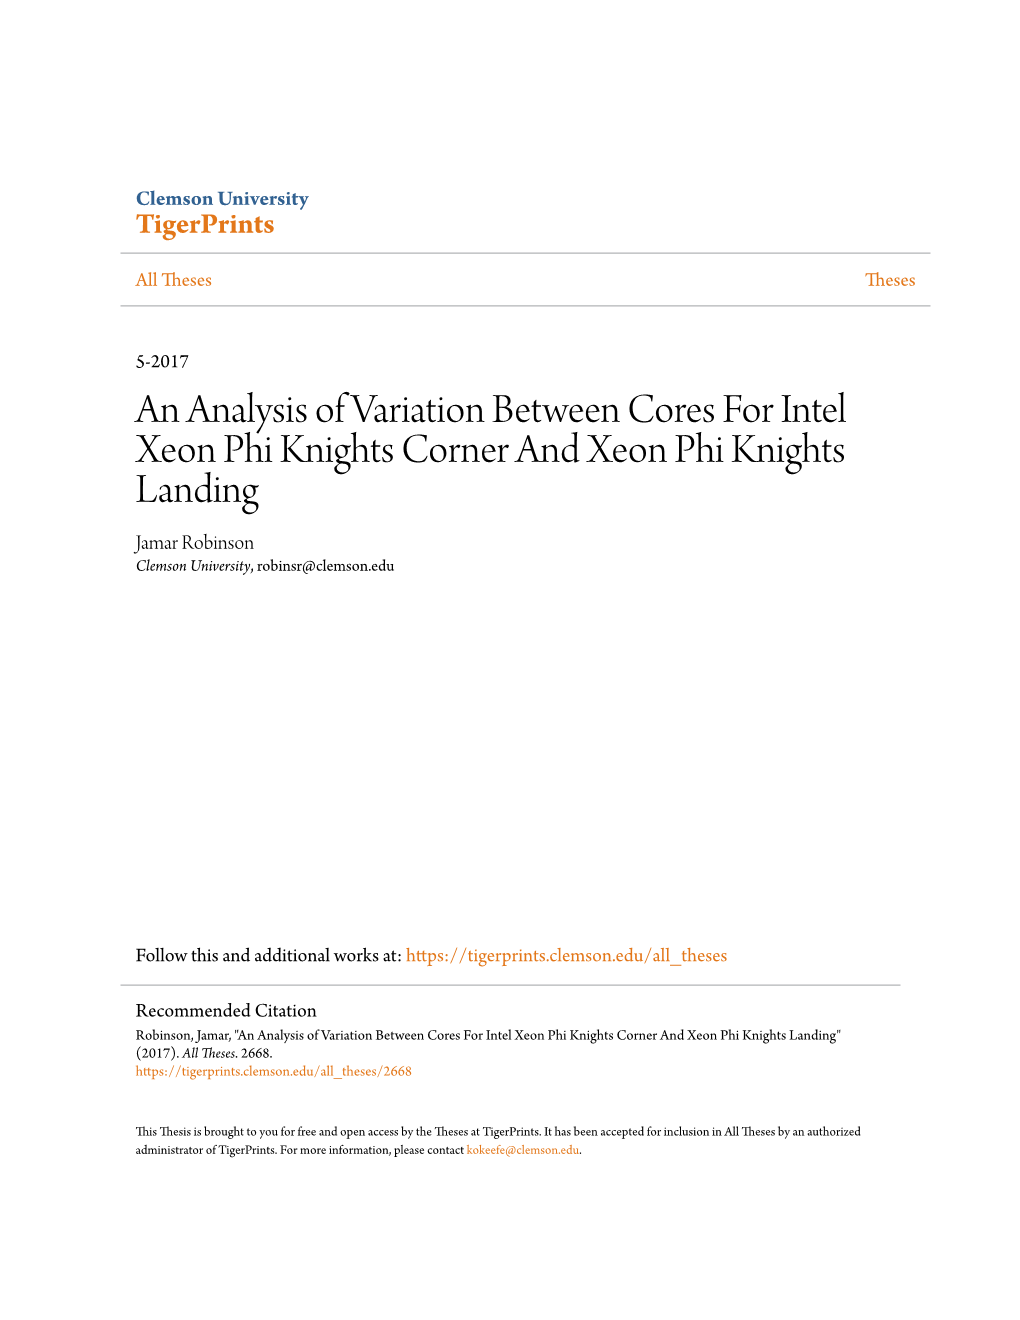 An Analysis of Variation Between Cores for Intel Xeon Phi Knights Corner and Xeon Phi Knights Landing Jamar Robinson Clemson University, Robinsr@Clemson.Edu